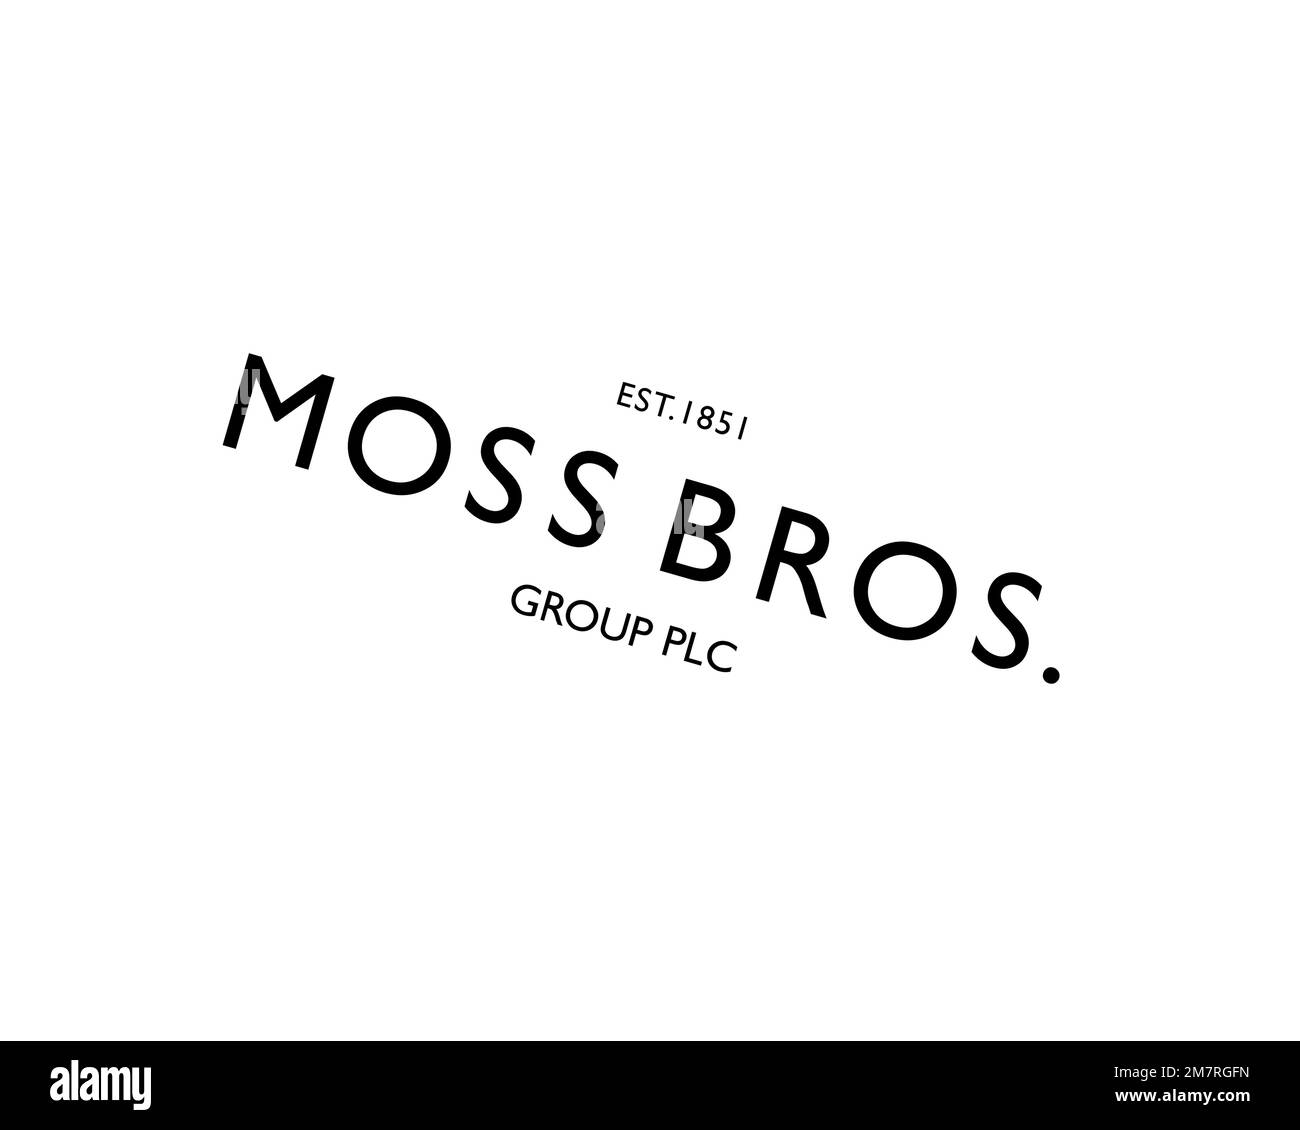 Moss Bros Group, Rotated Logo, White Background B Stock Photo - Alamy